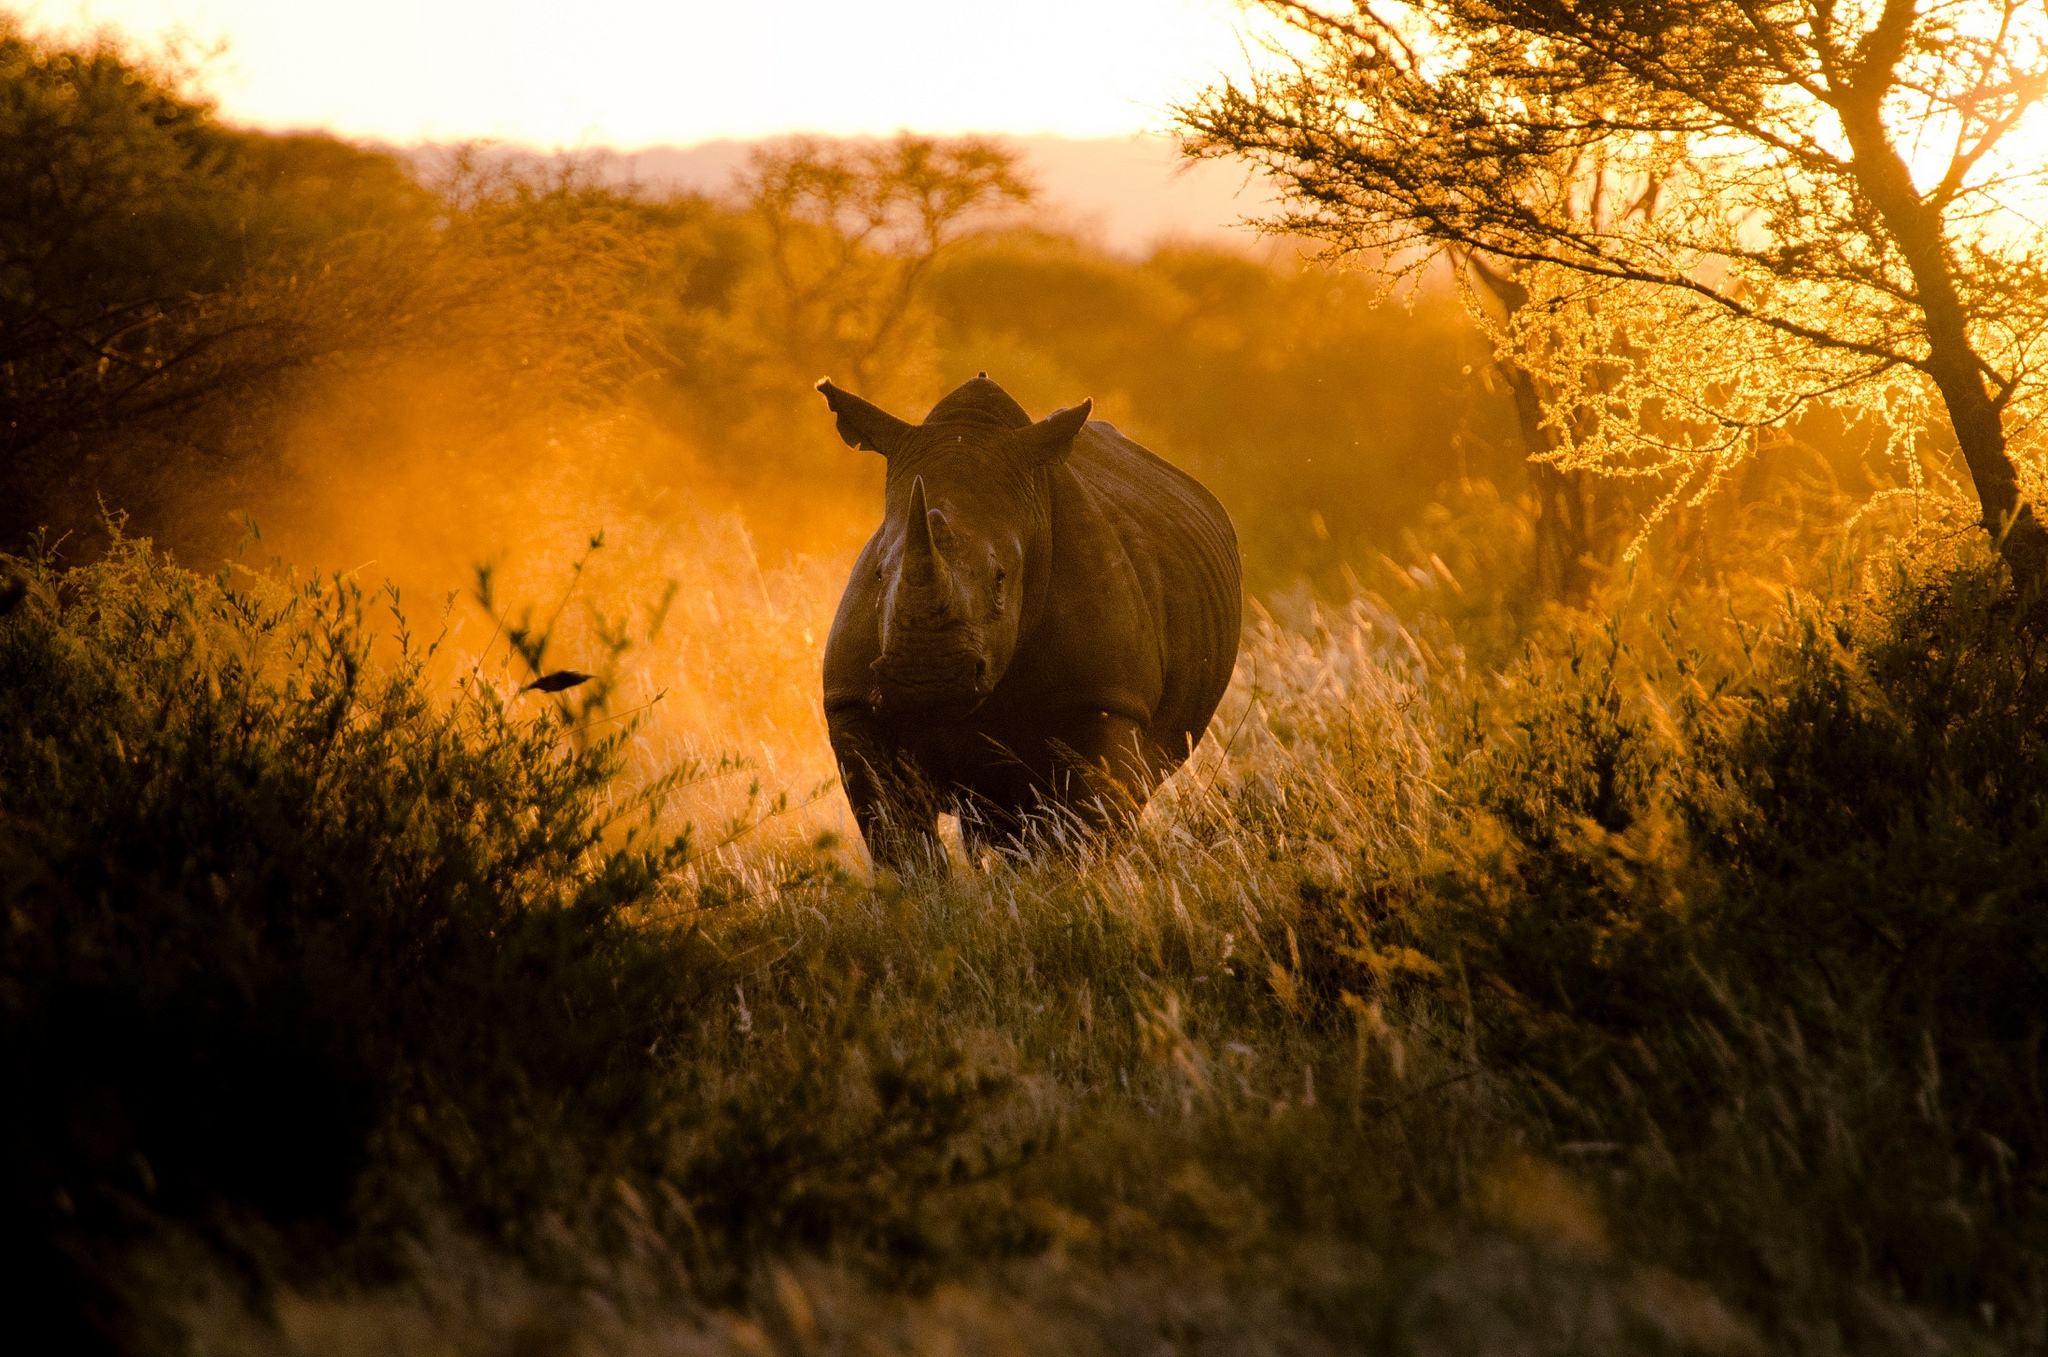 afrika wallpaper,rinoceronte,fauna silvestre,rinoceronte negro,rinoceronte blanco,safari